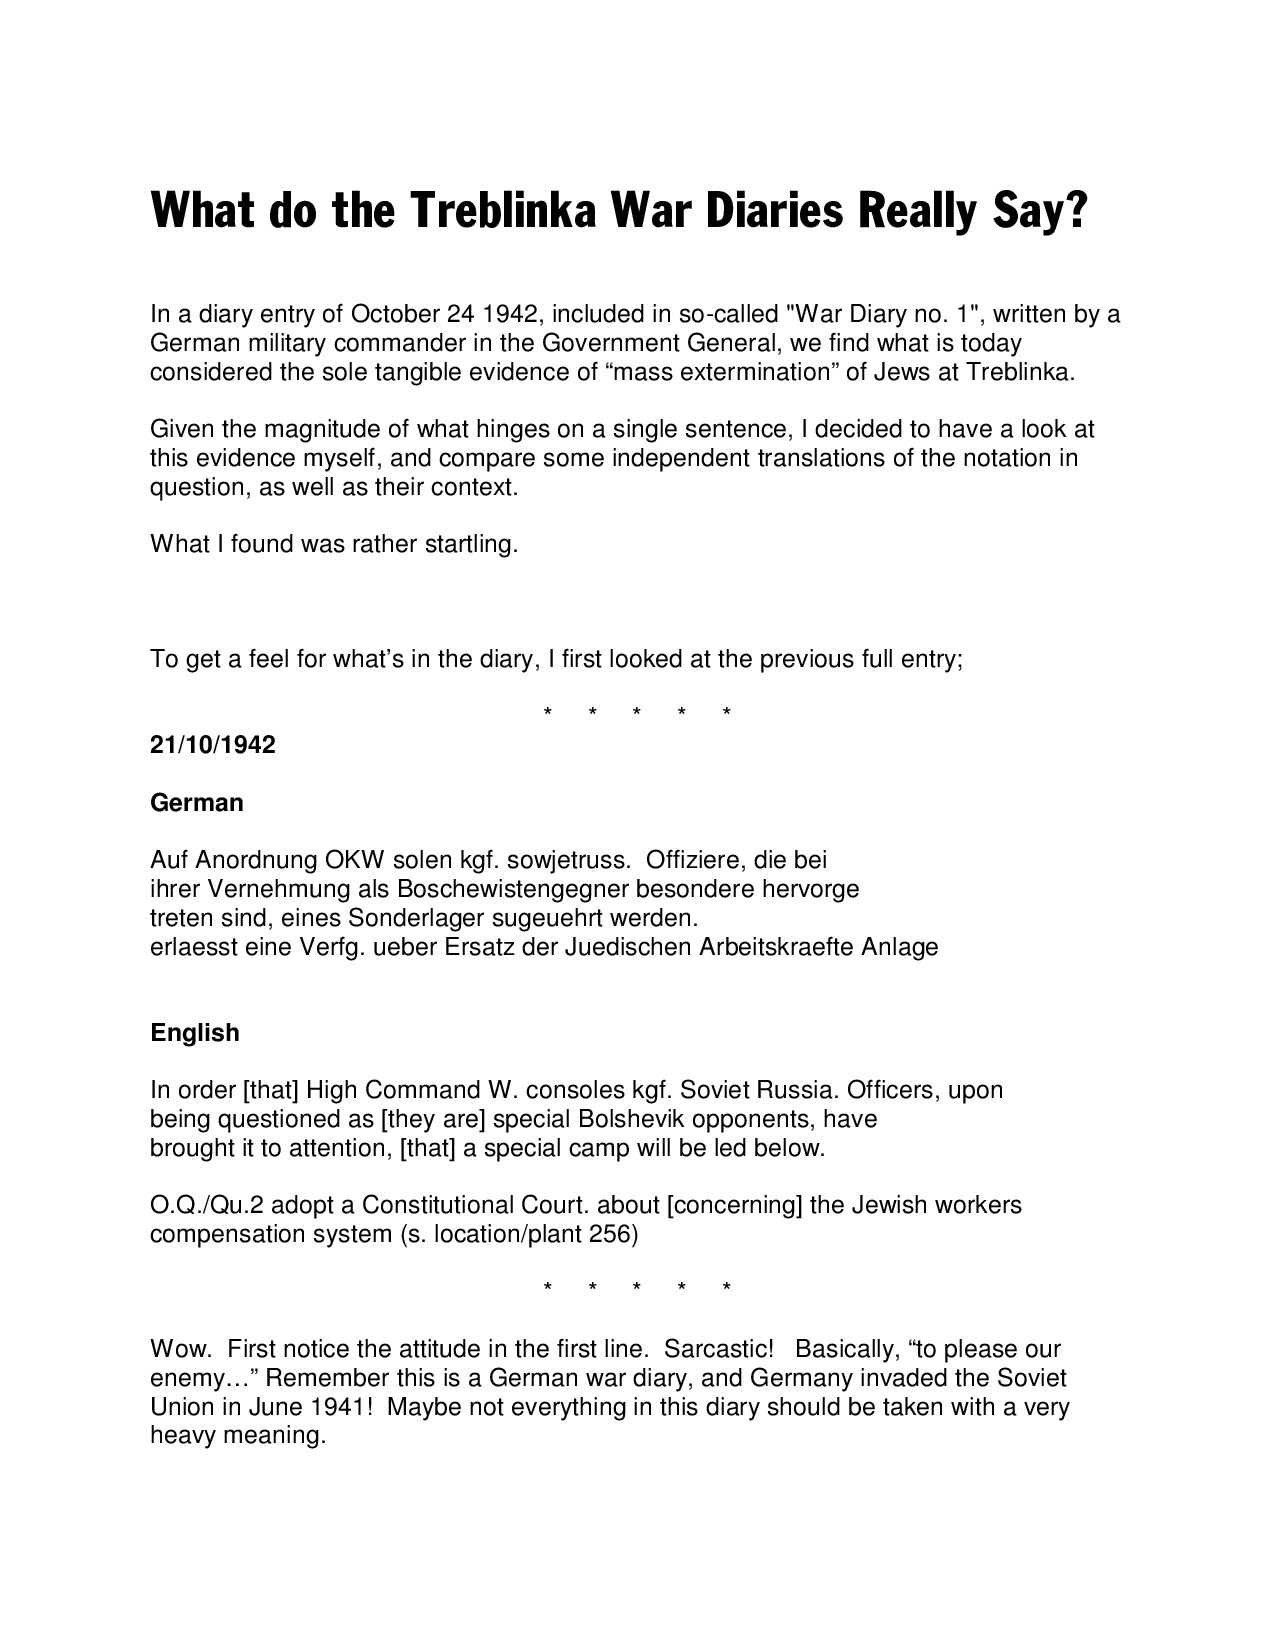 Microsoft Word - What do the Treblinka War Diaries Really Say.doc